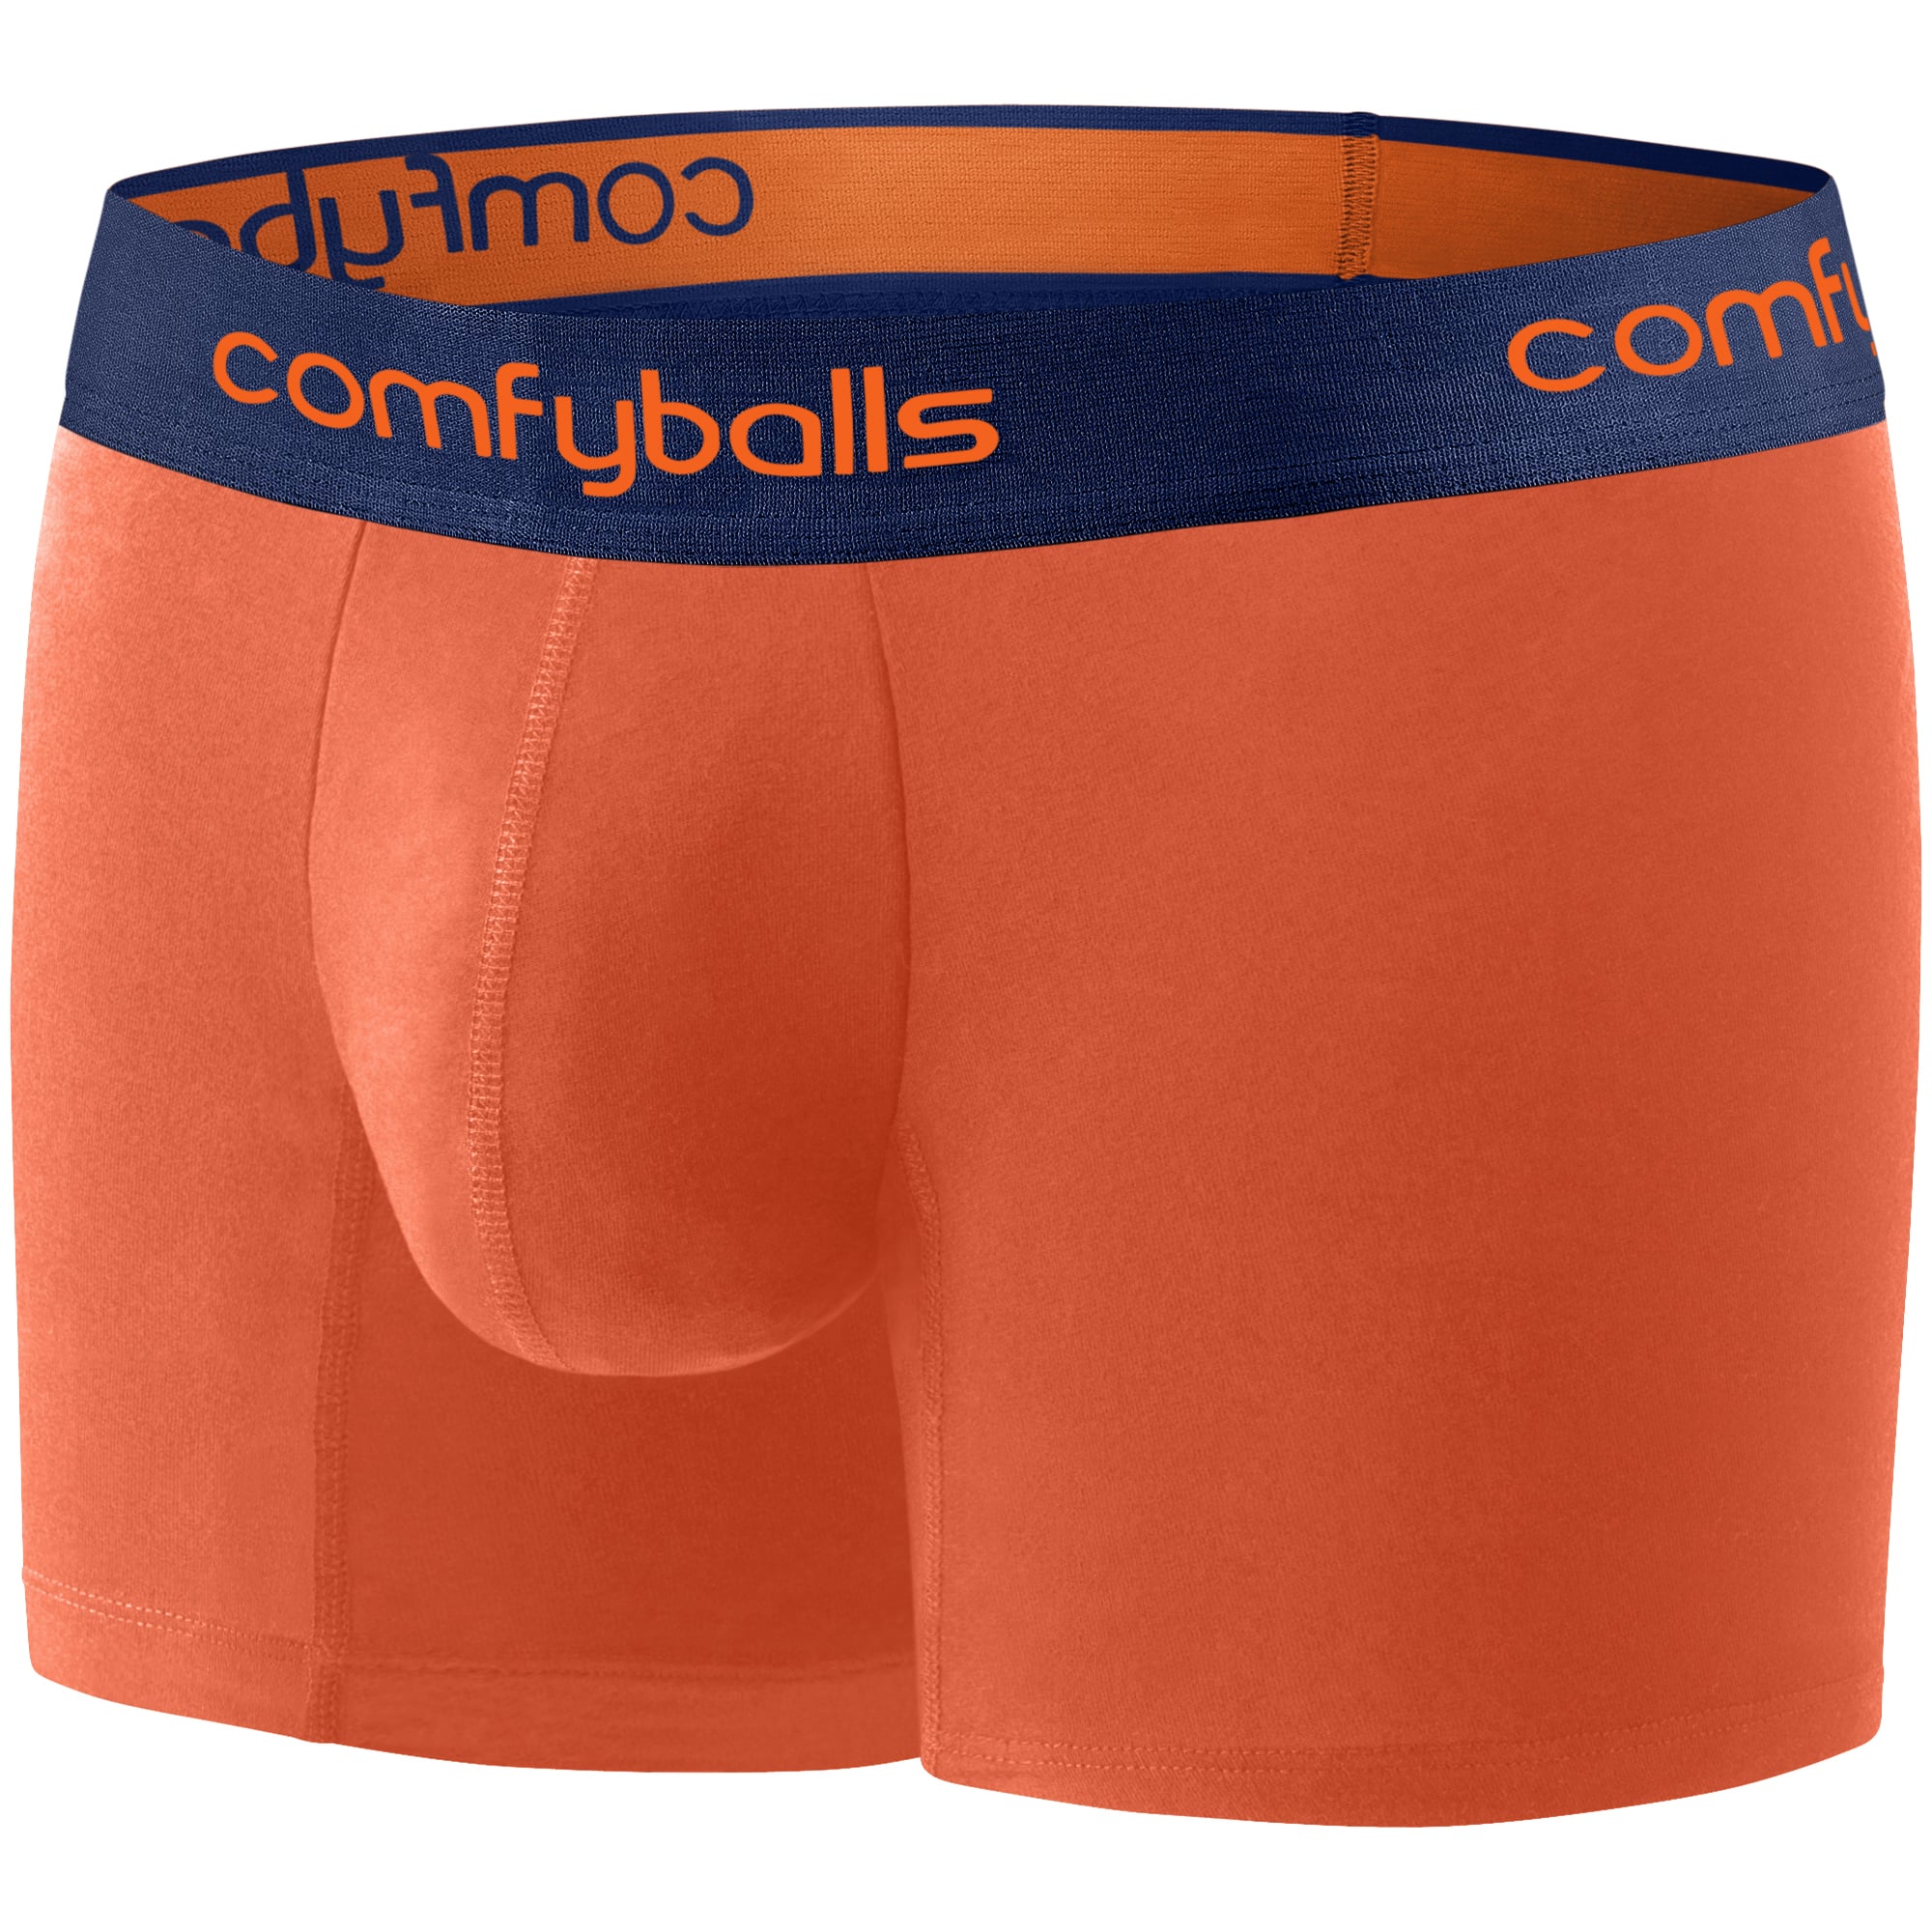 Comfyballs Tights - S - Orange